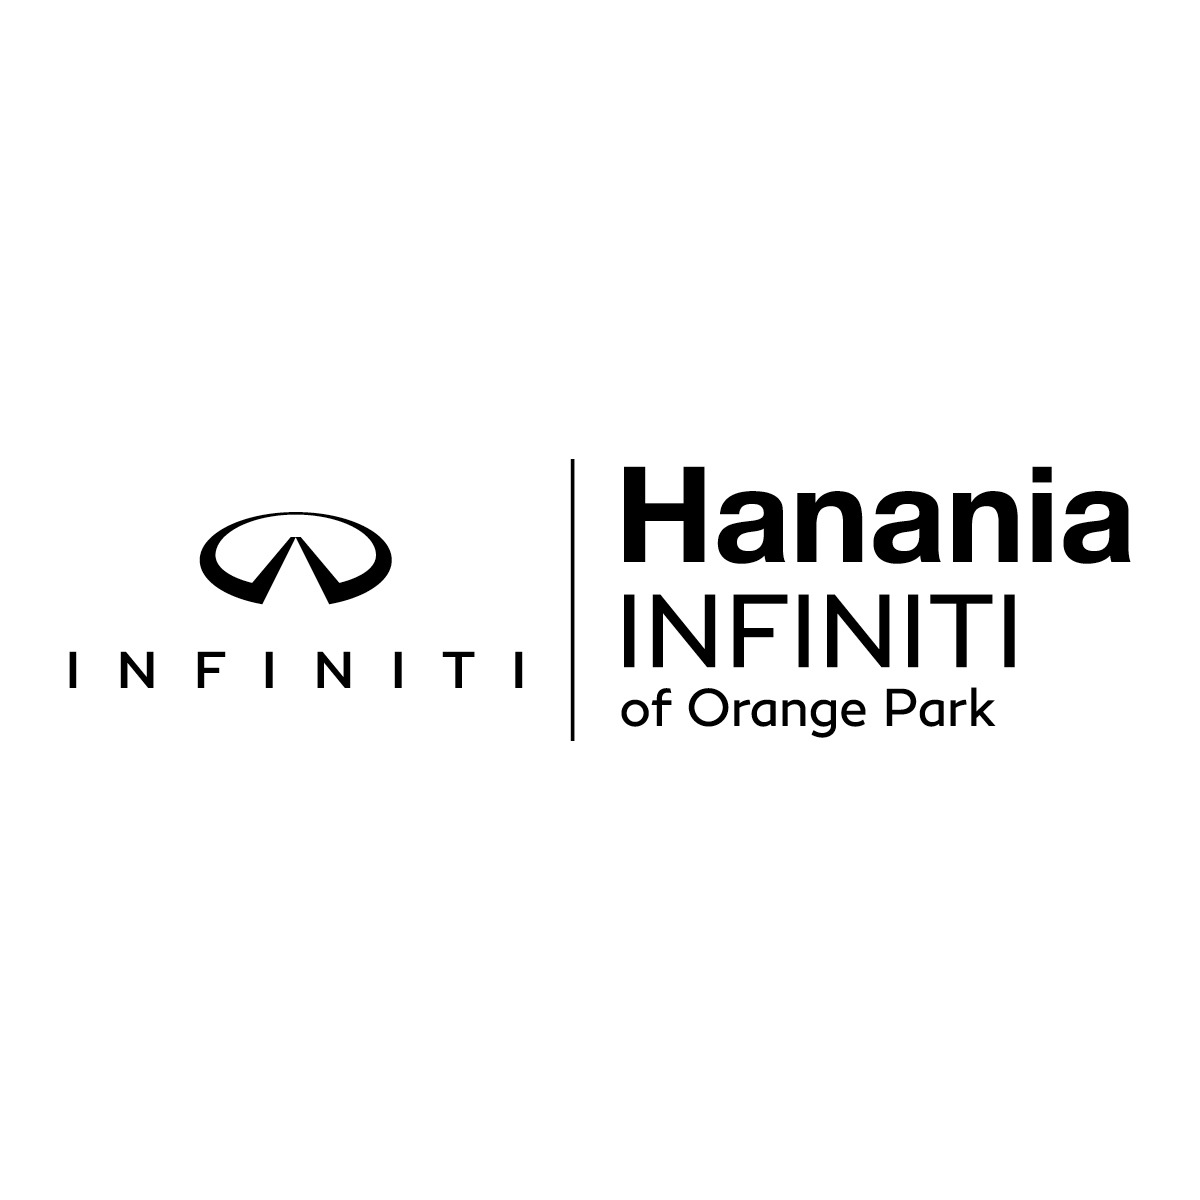 Hanania INFINITI of Orange Park - Jacksonville, FL 32244 - (904)777-1600 | ShowMeLocal.com